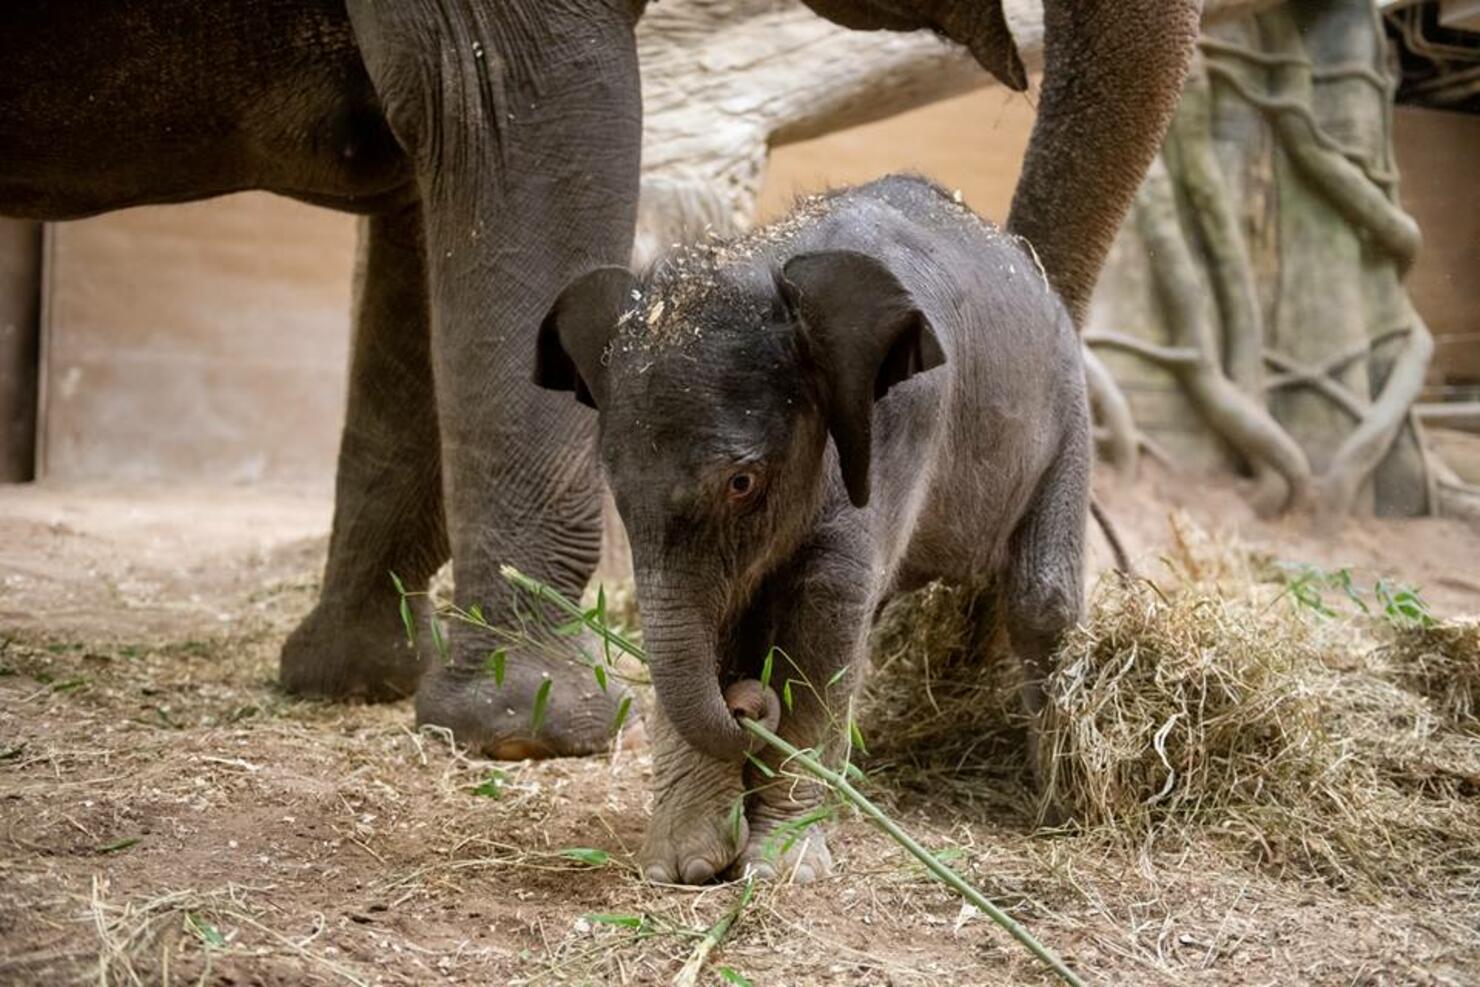 columbus zoo announces 3-week baby elephant dies suddenly